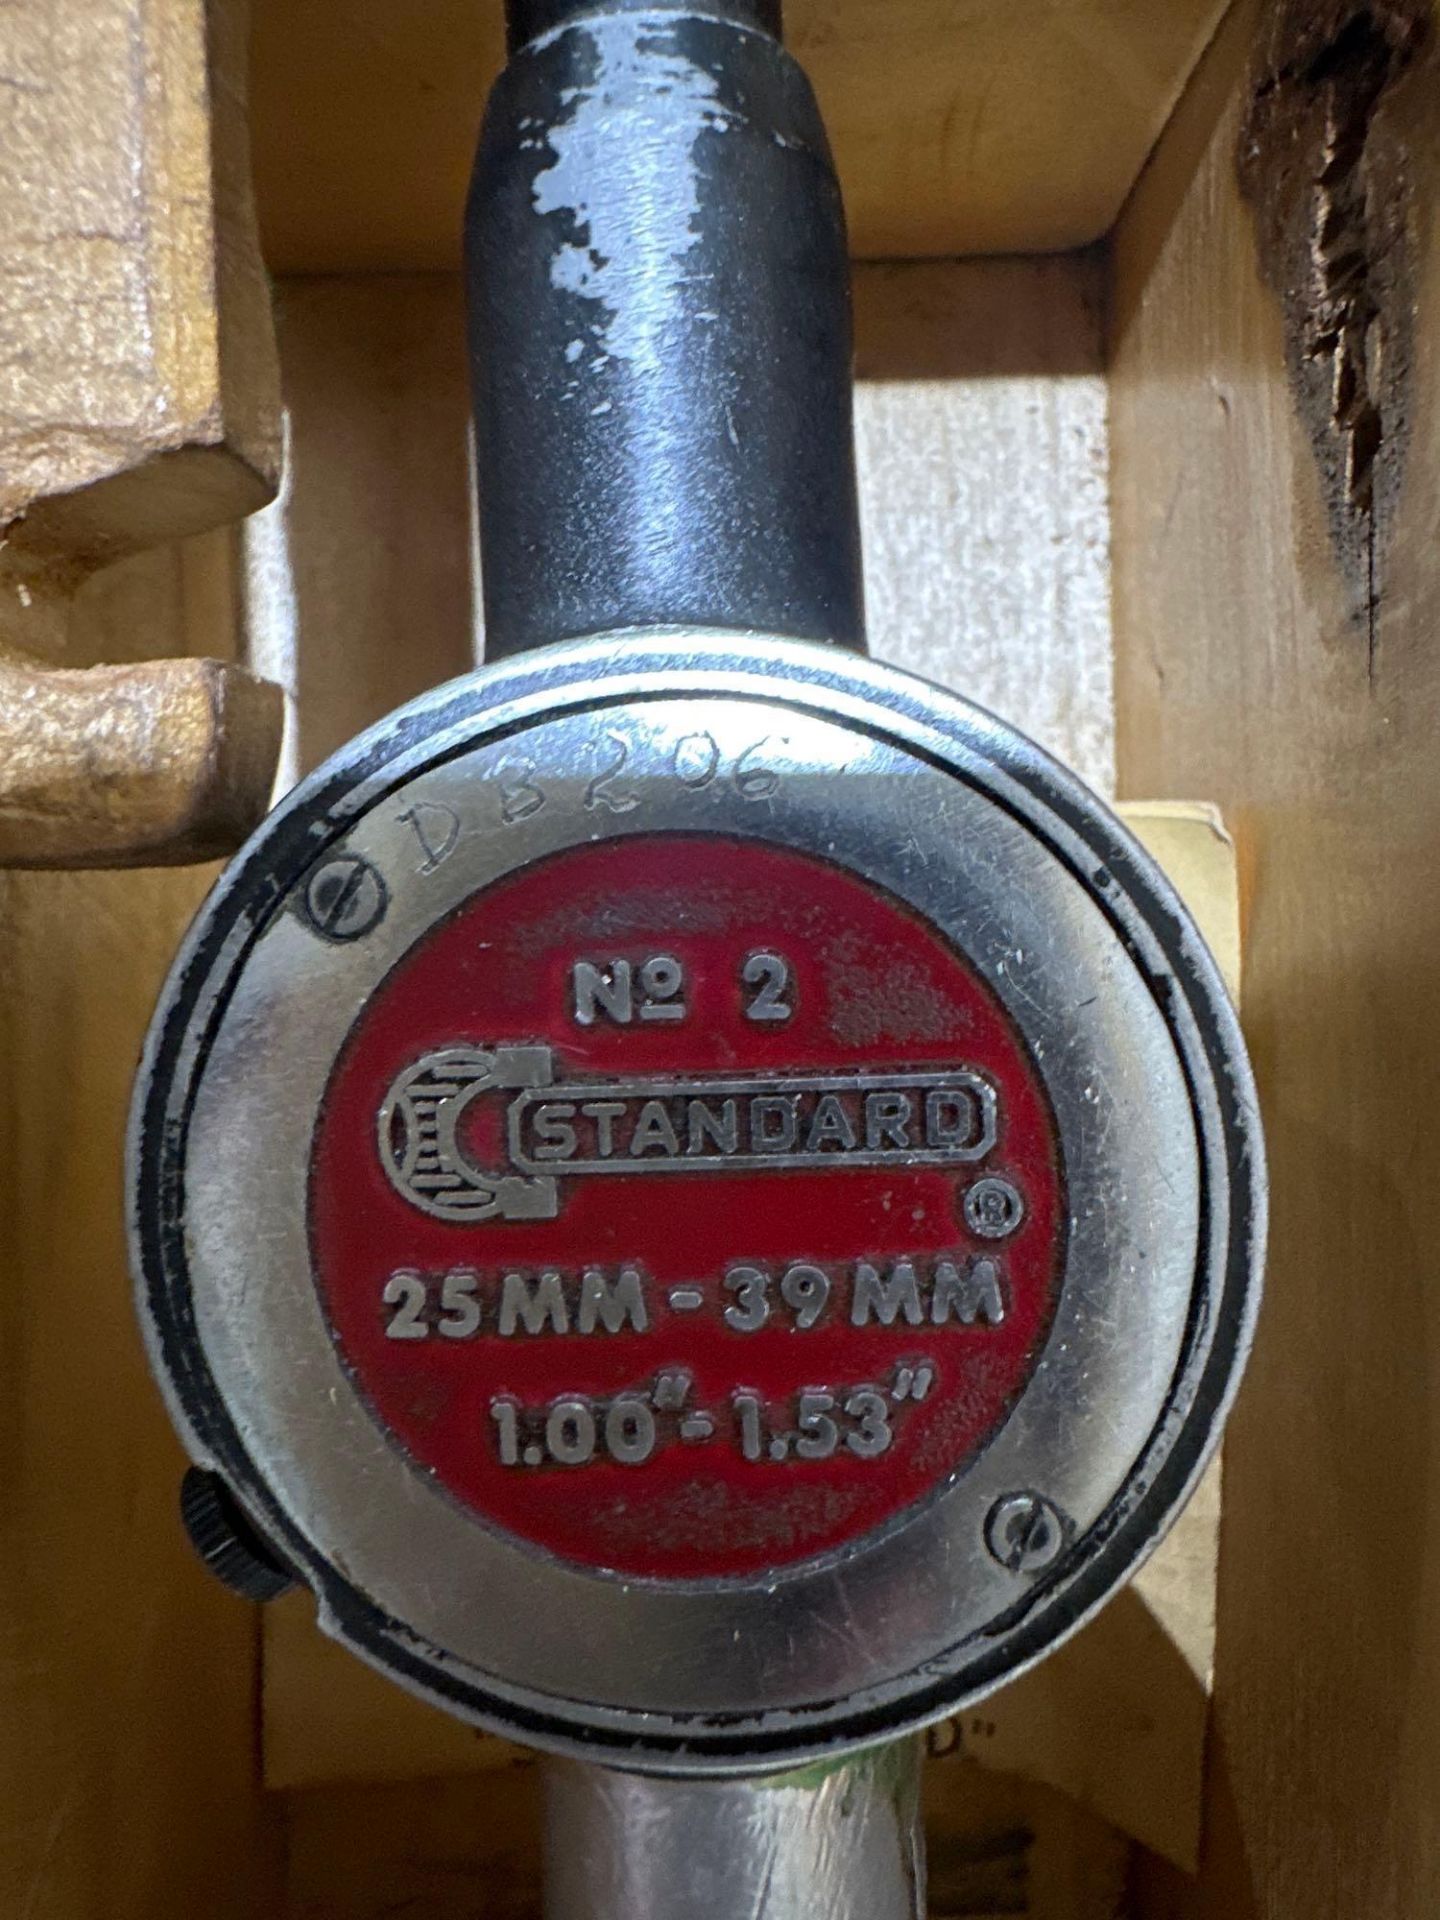 Standard Gage Company 1.00”-1.53” Dial Bore Gage - Bild 4 aus 7